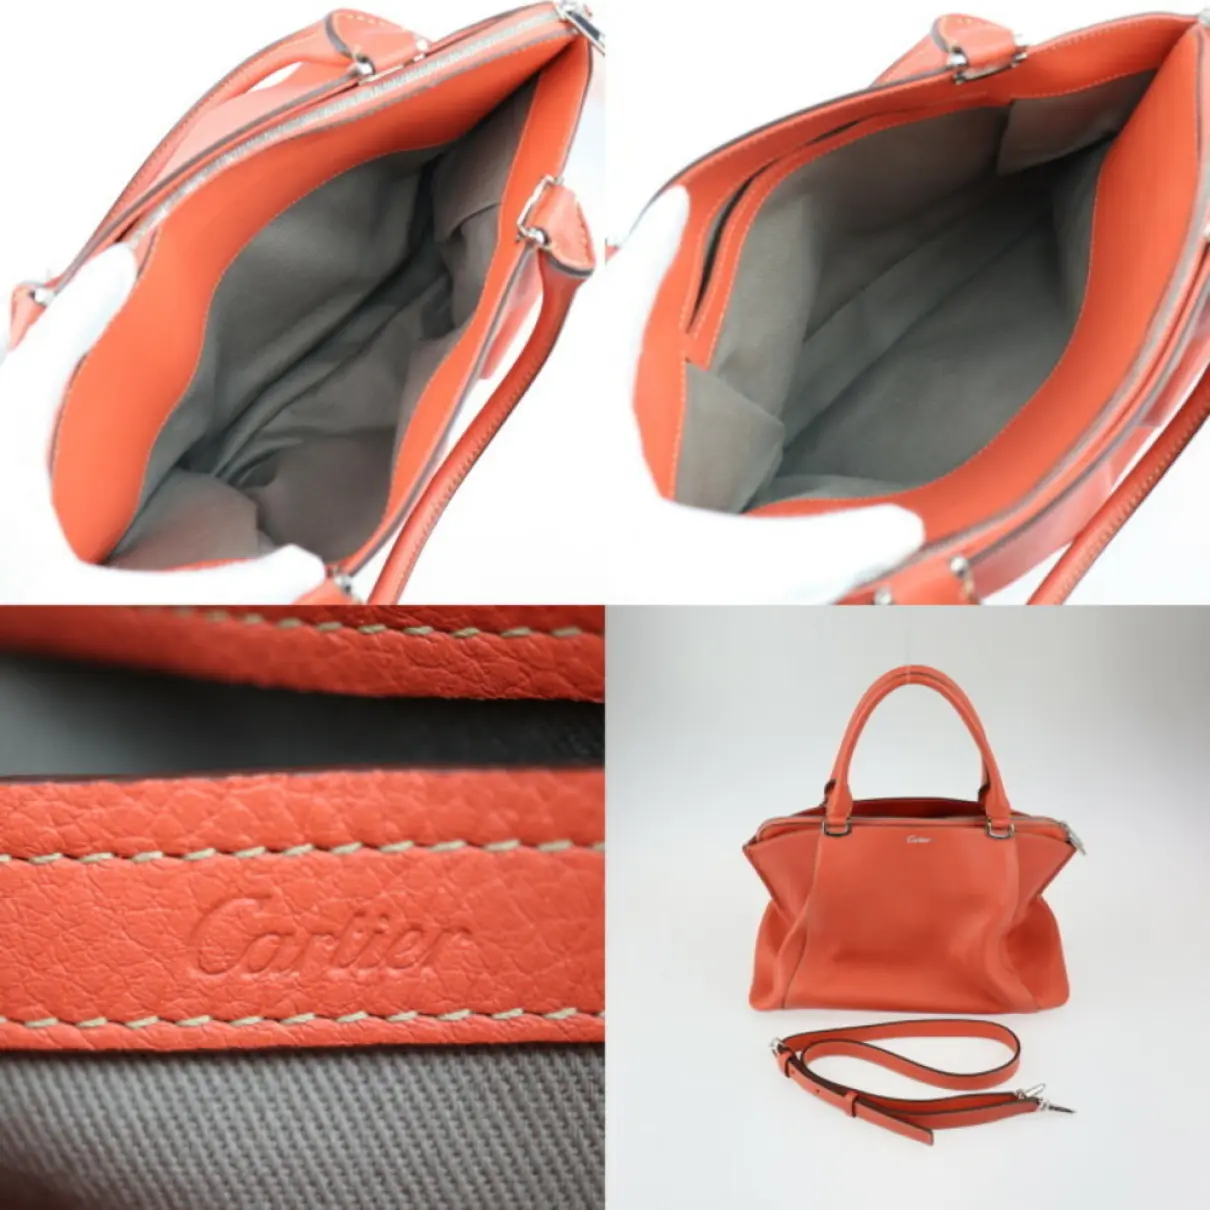 C leather handbag Cartier